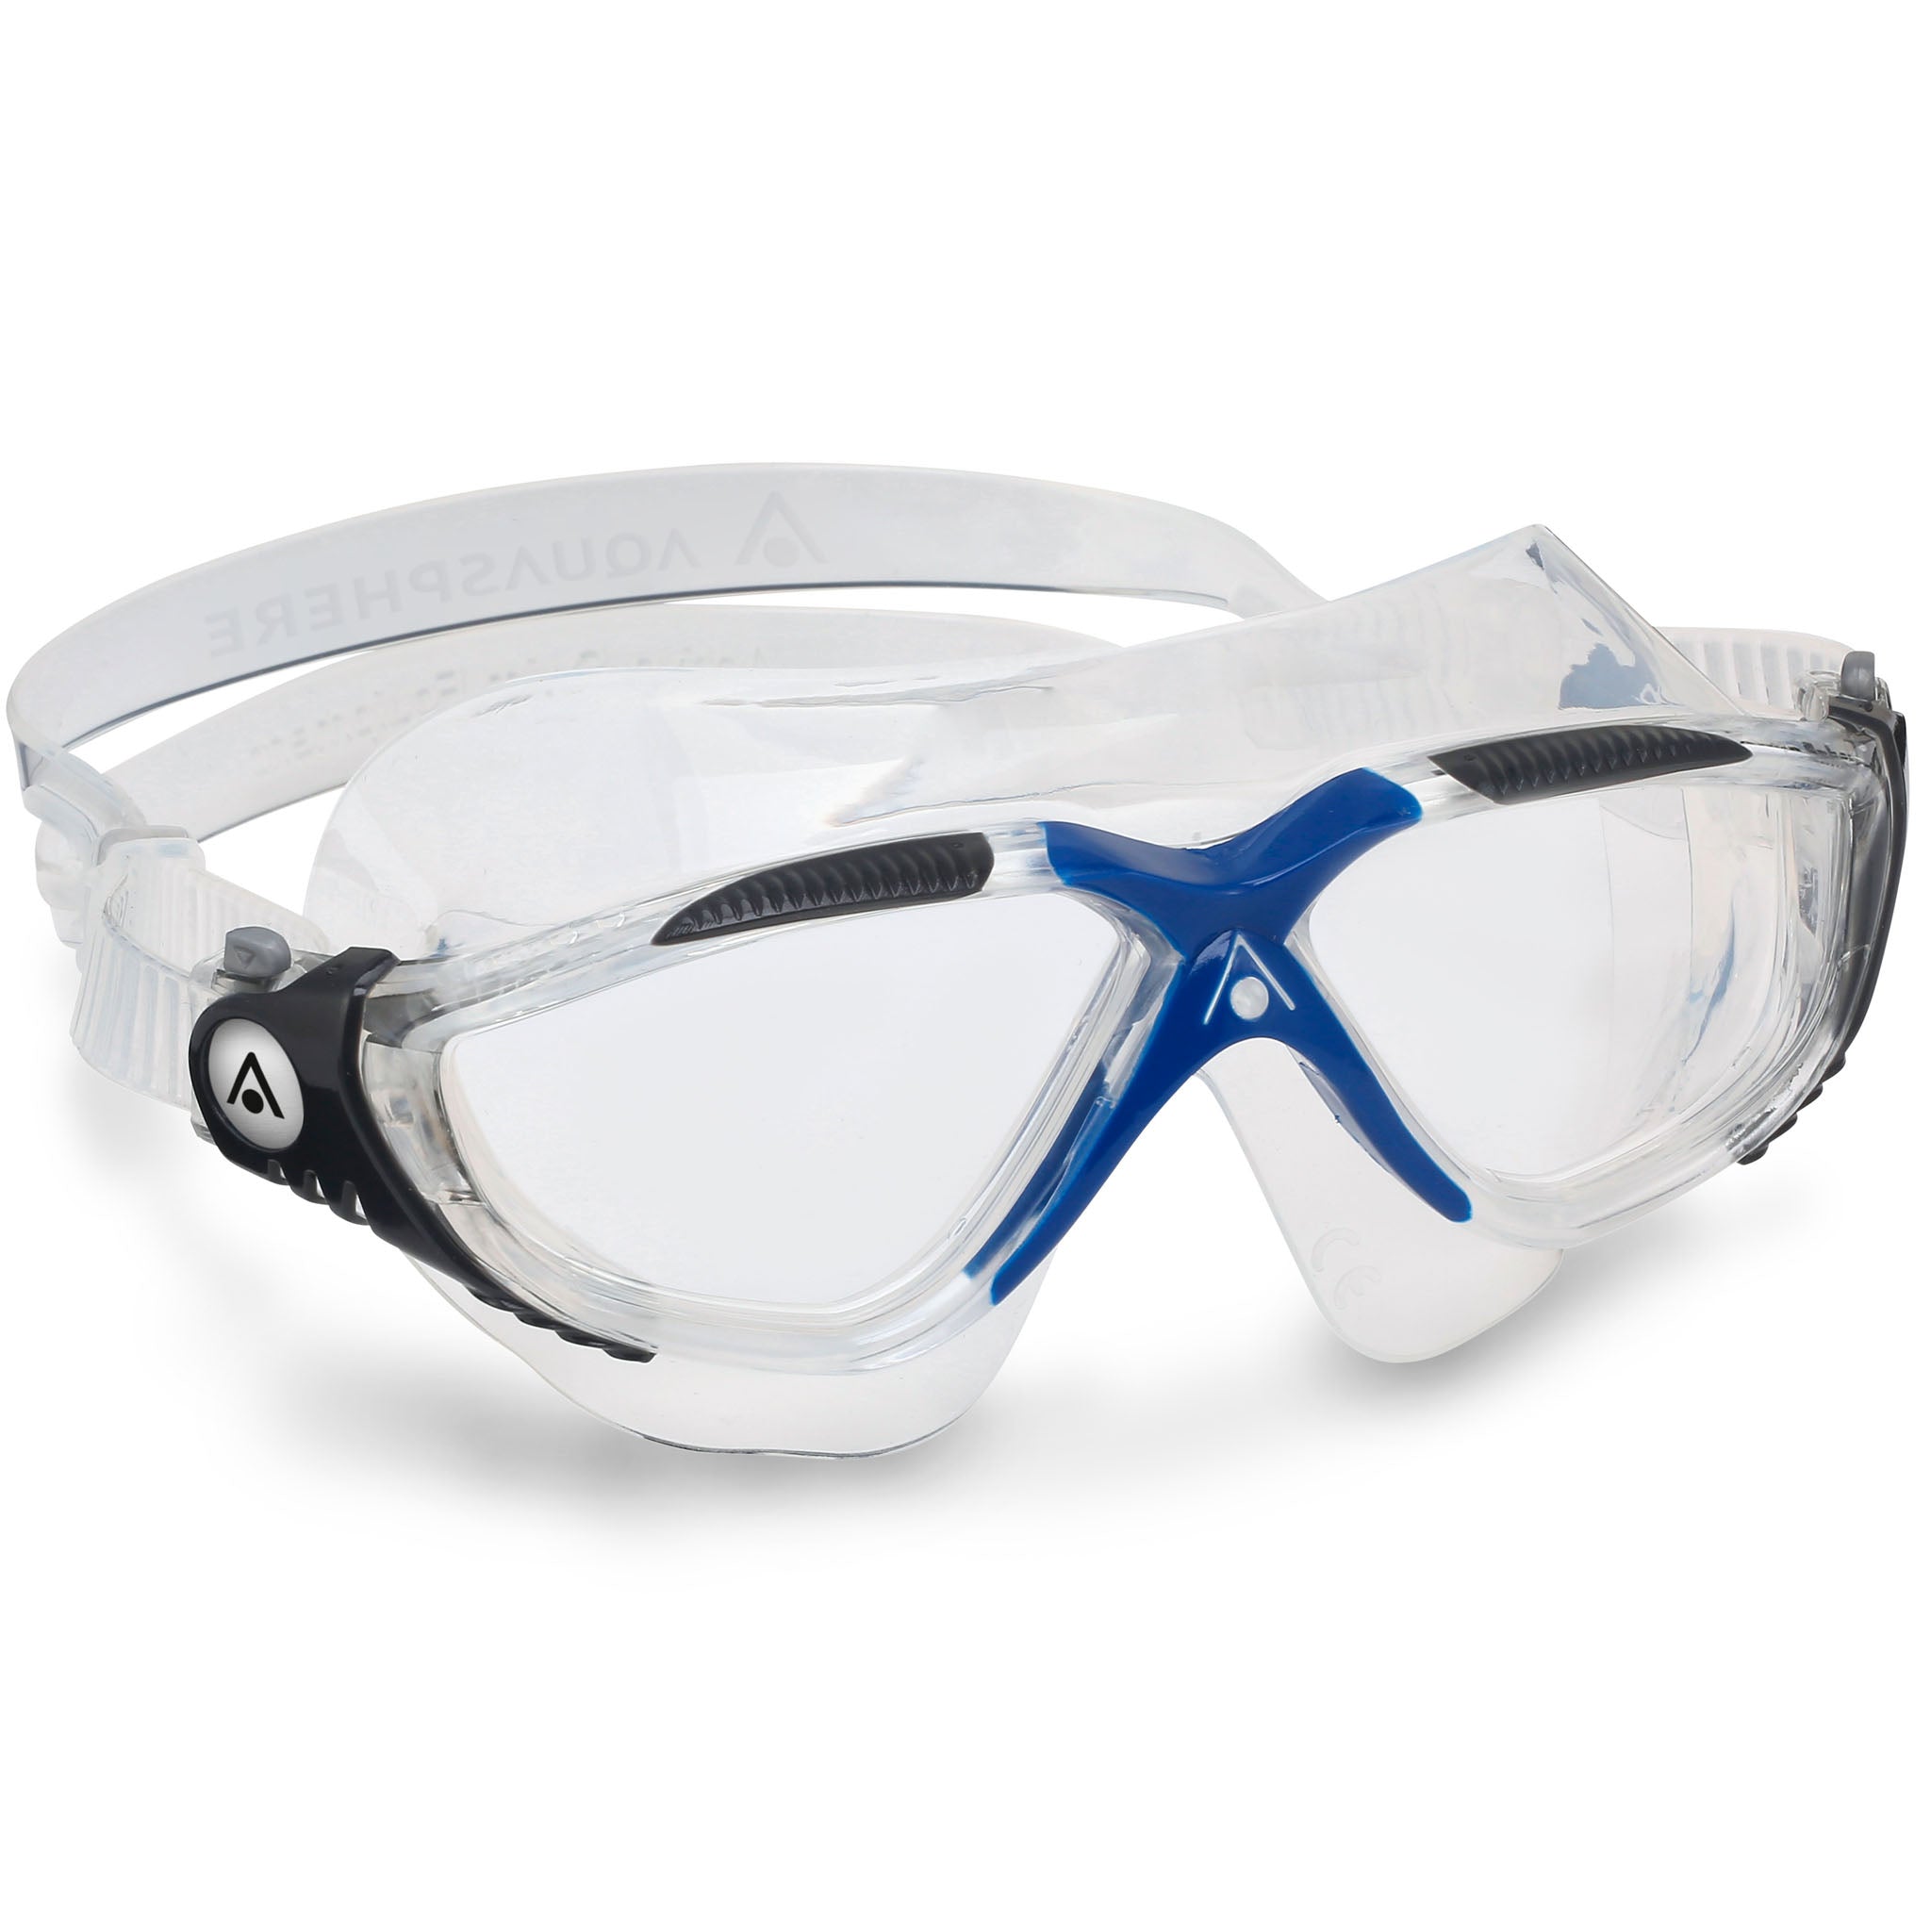 Aquasphere Vista Swim Goggles Mask - Dark Grey/Blue Detail